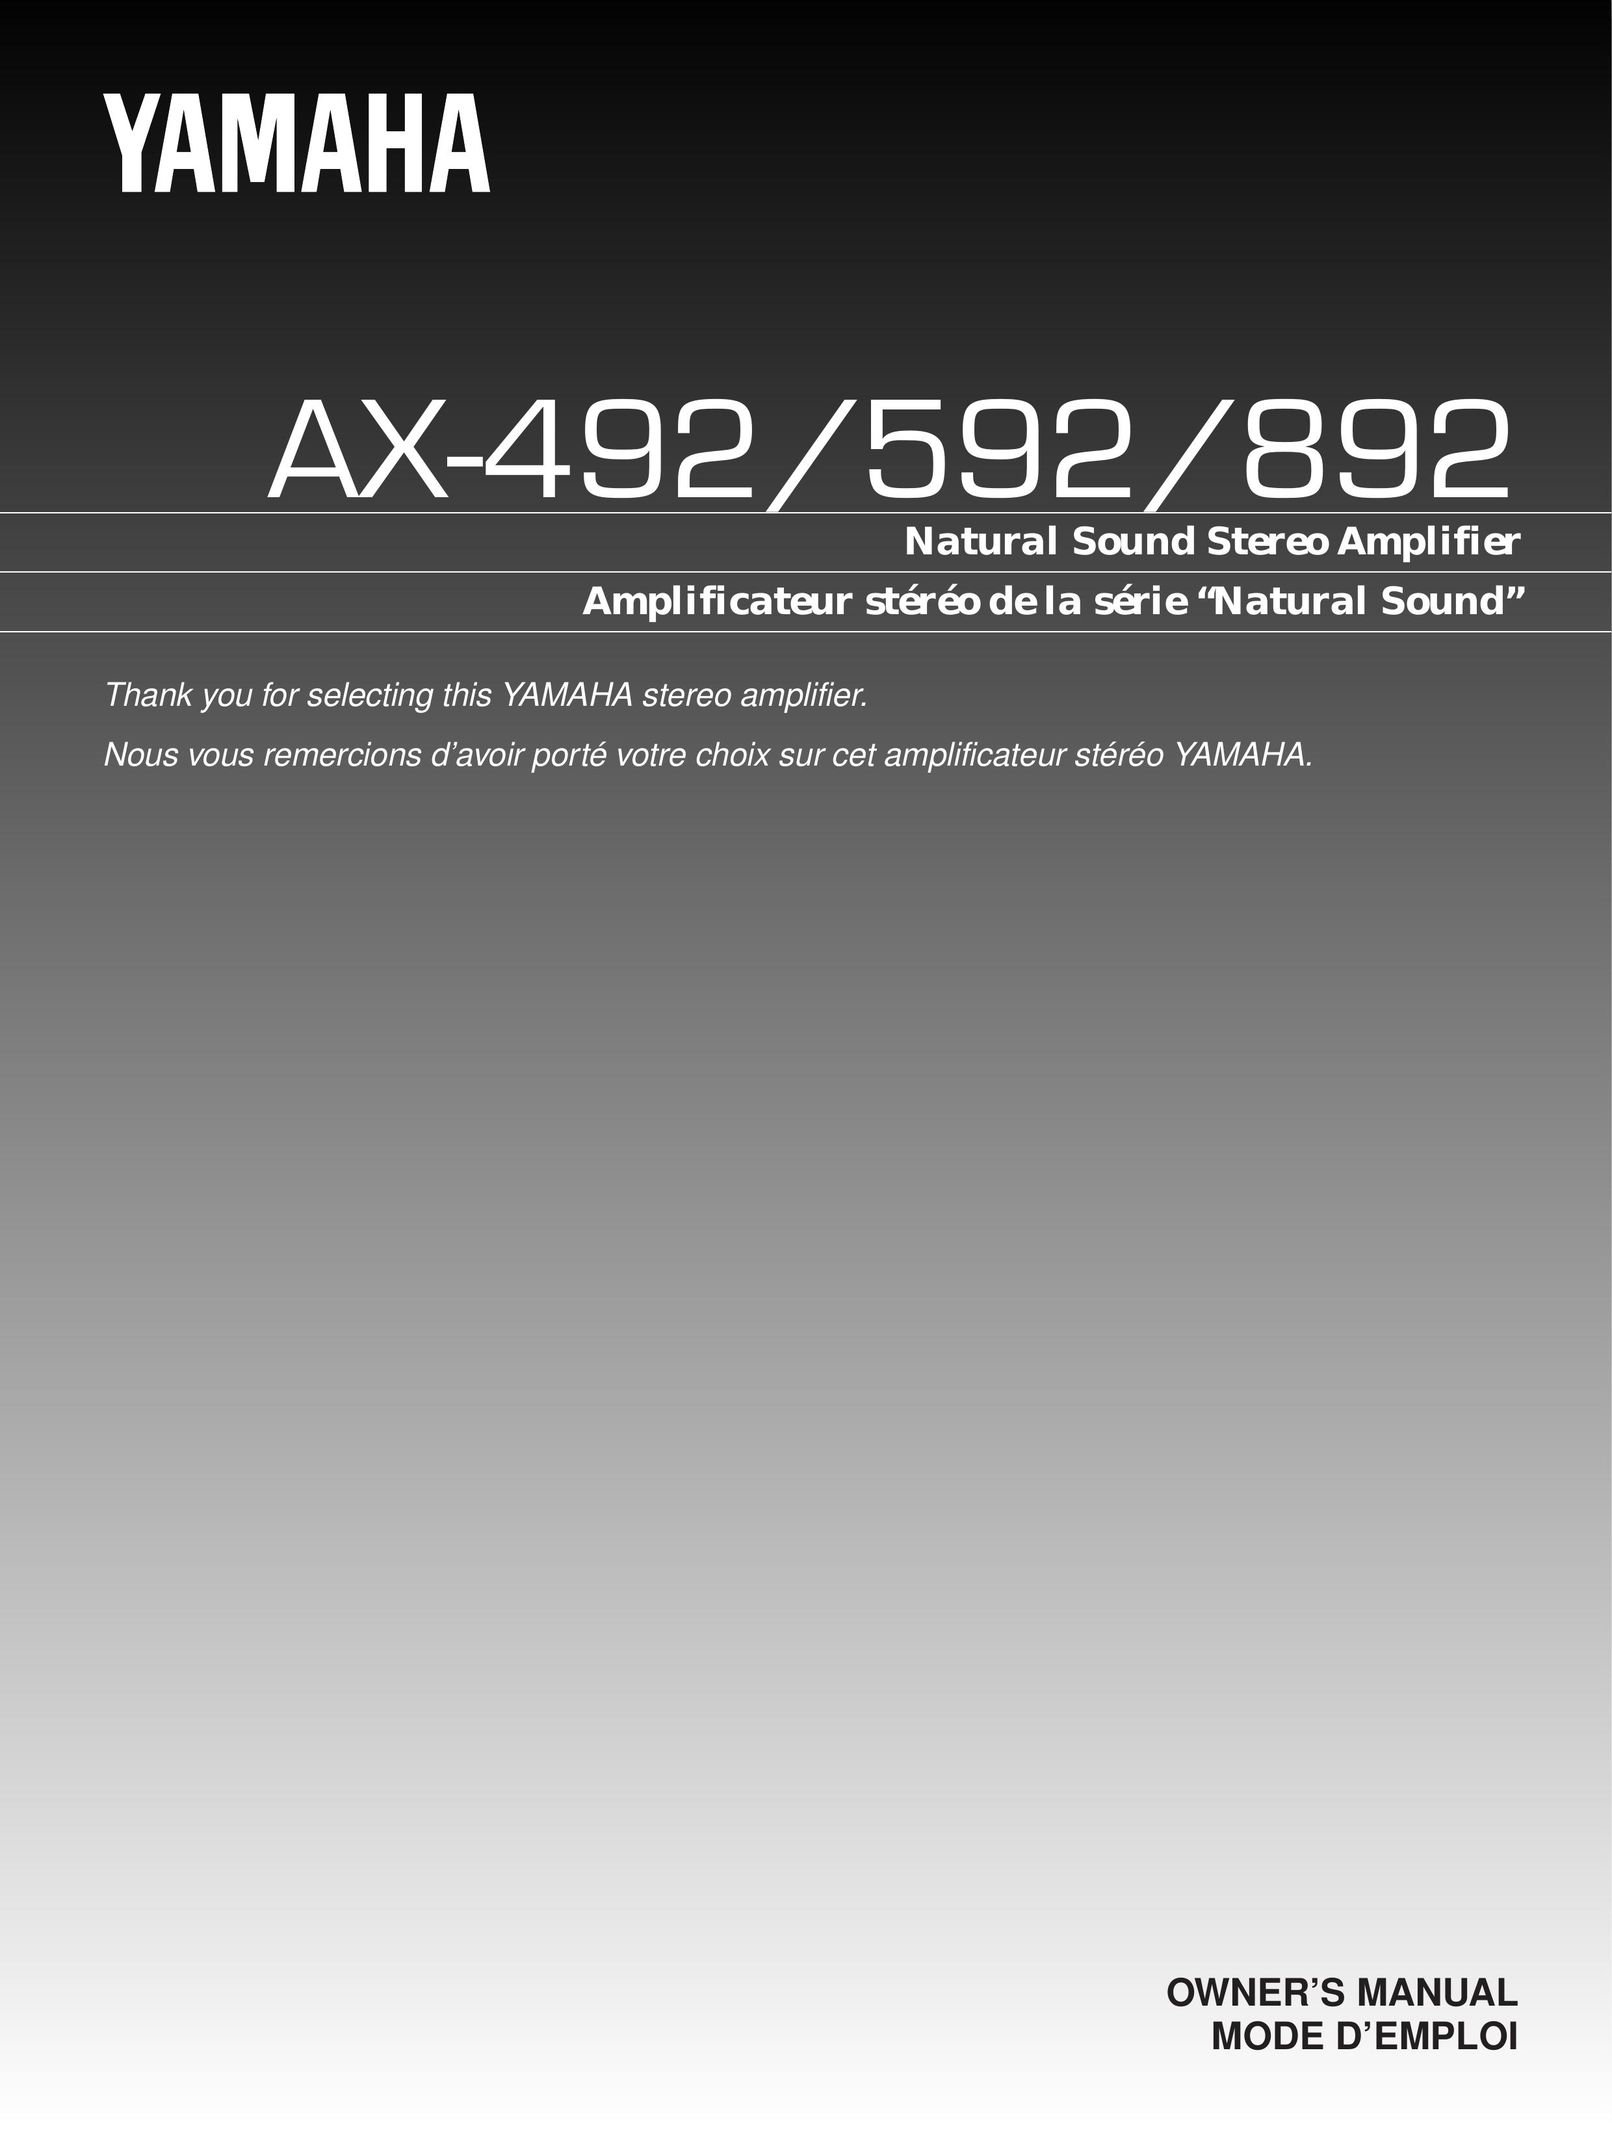 Yamaha AX-592 Stereo Amplifier User Manual